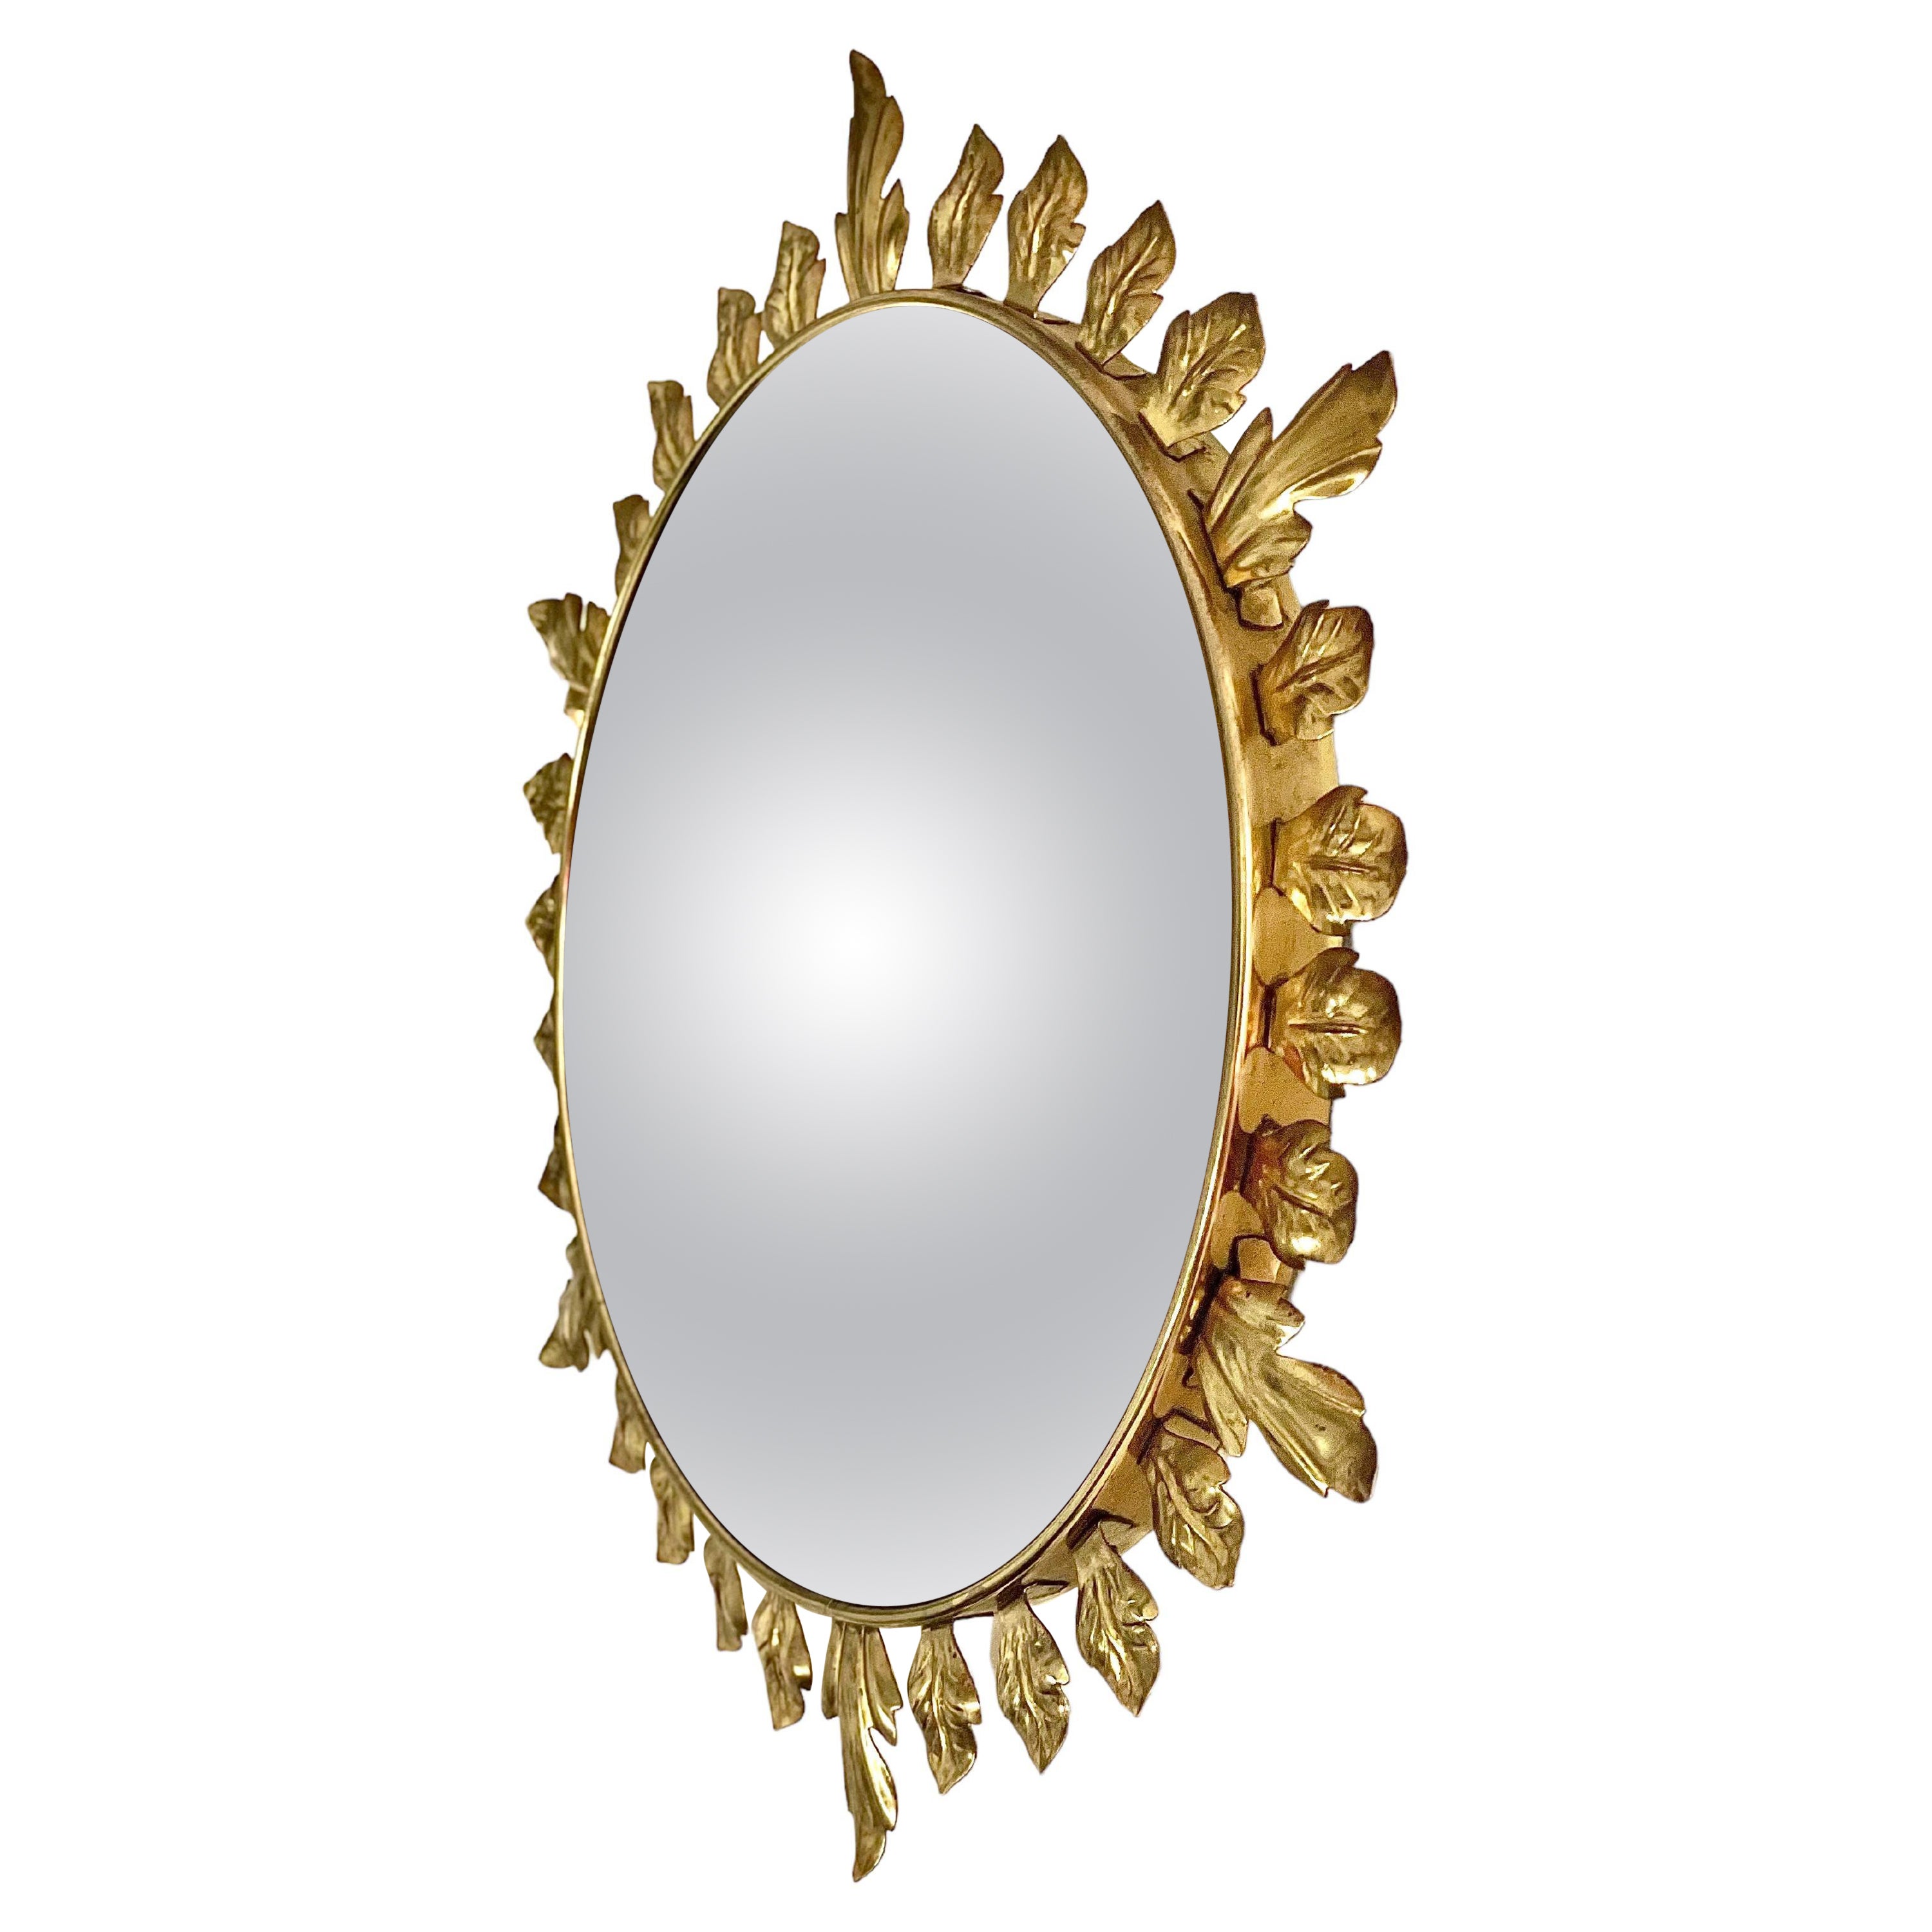 Miroir convexe en métal doré en forme de soleil